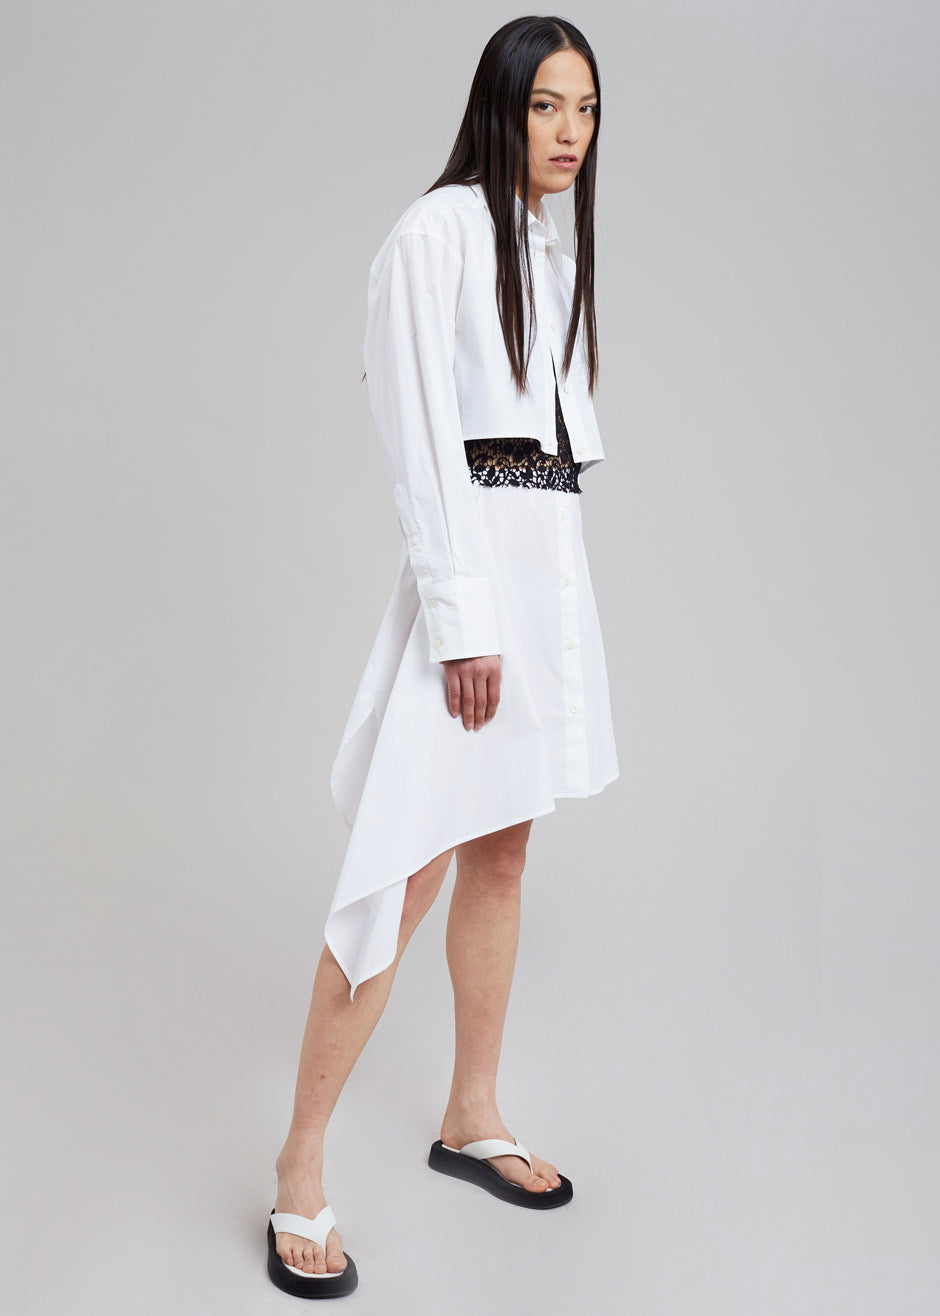 JW Anderson Lace Insert Shirt Dress - White/Black - 3